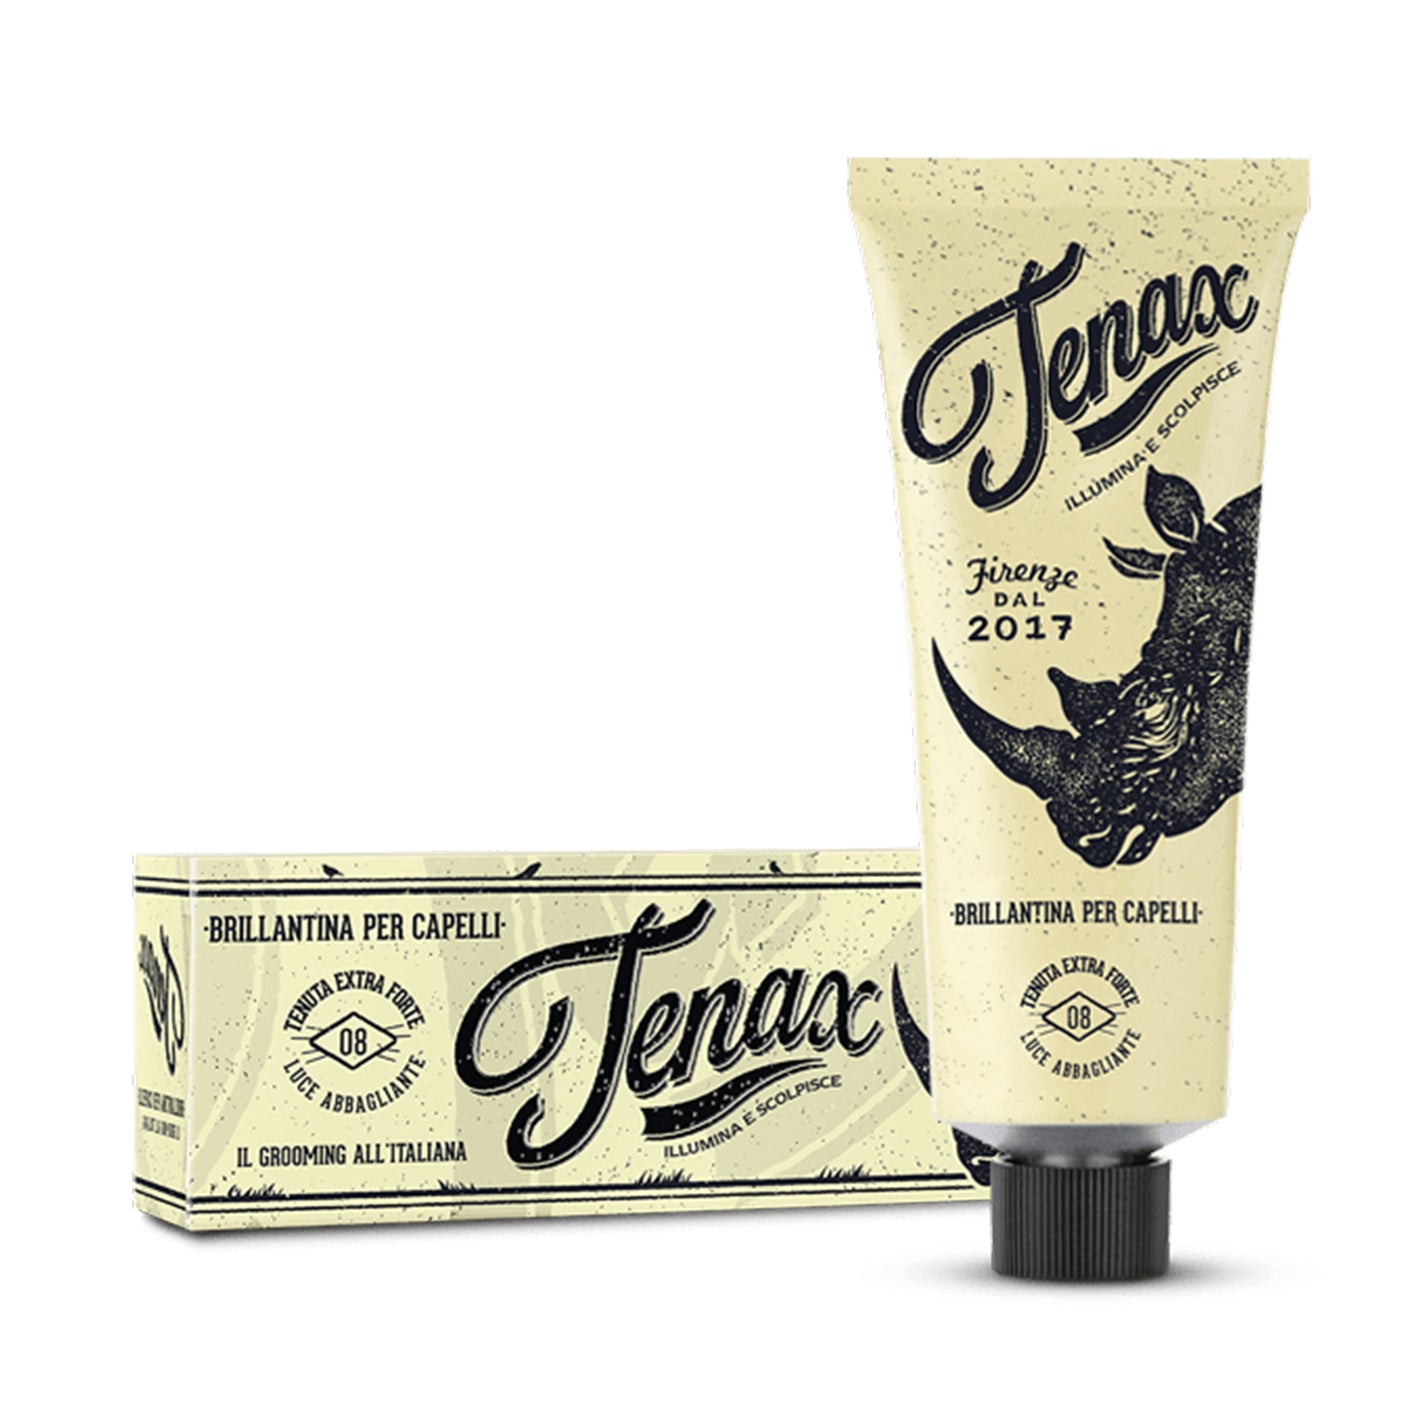 Tenax Hair Cream - Strong Hold (Yellow Tube)